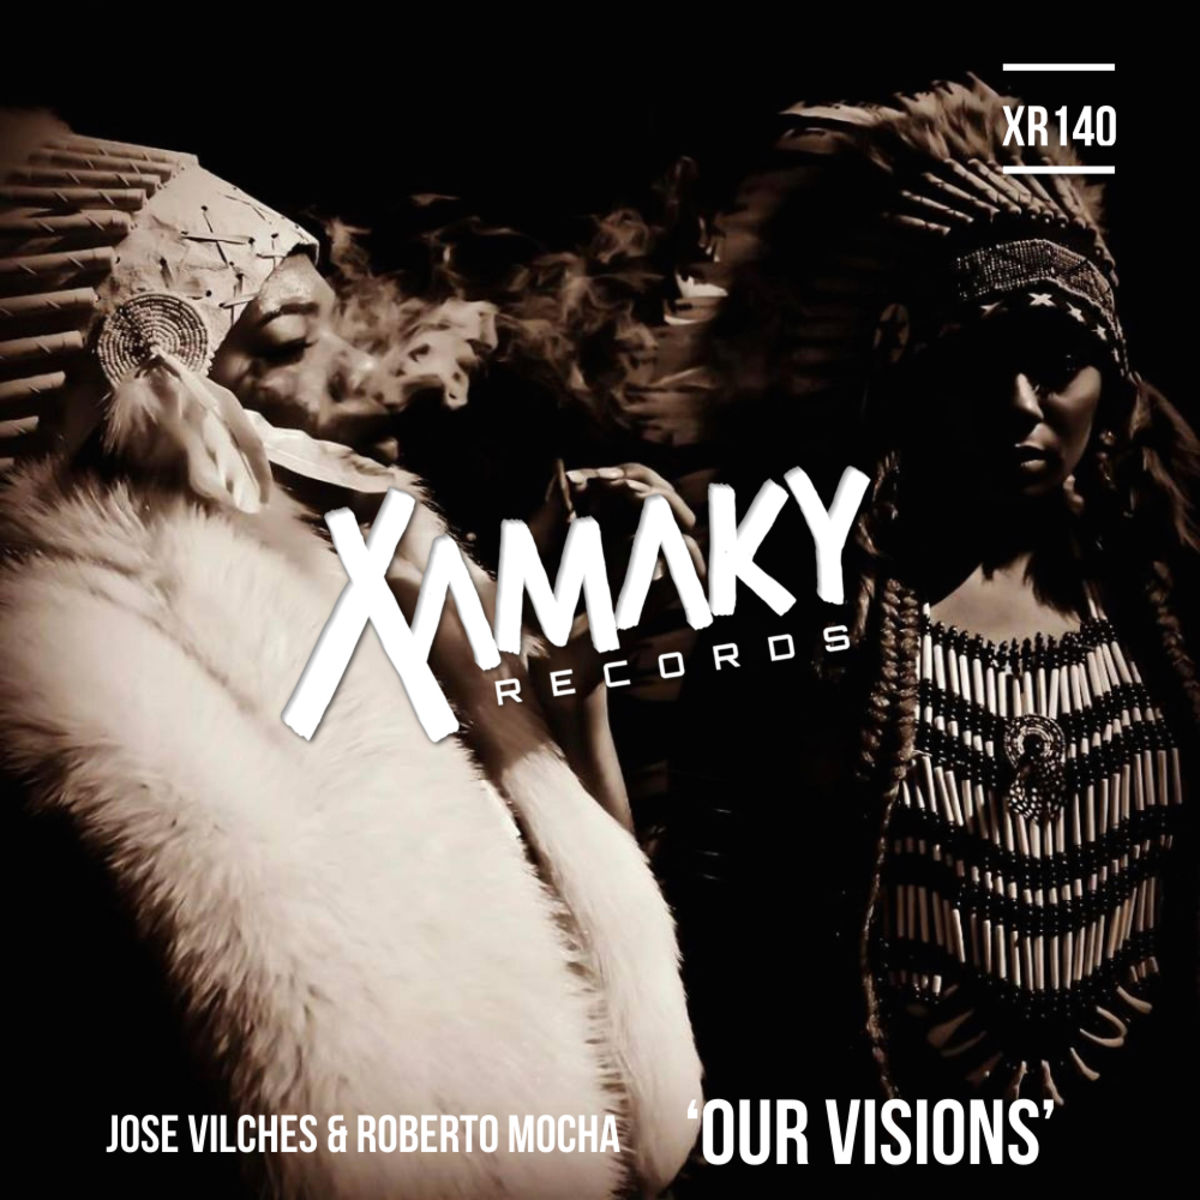 Jose Vilches & Roberto Mocha - Our Visions / Xamaky Records